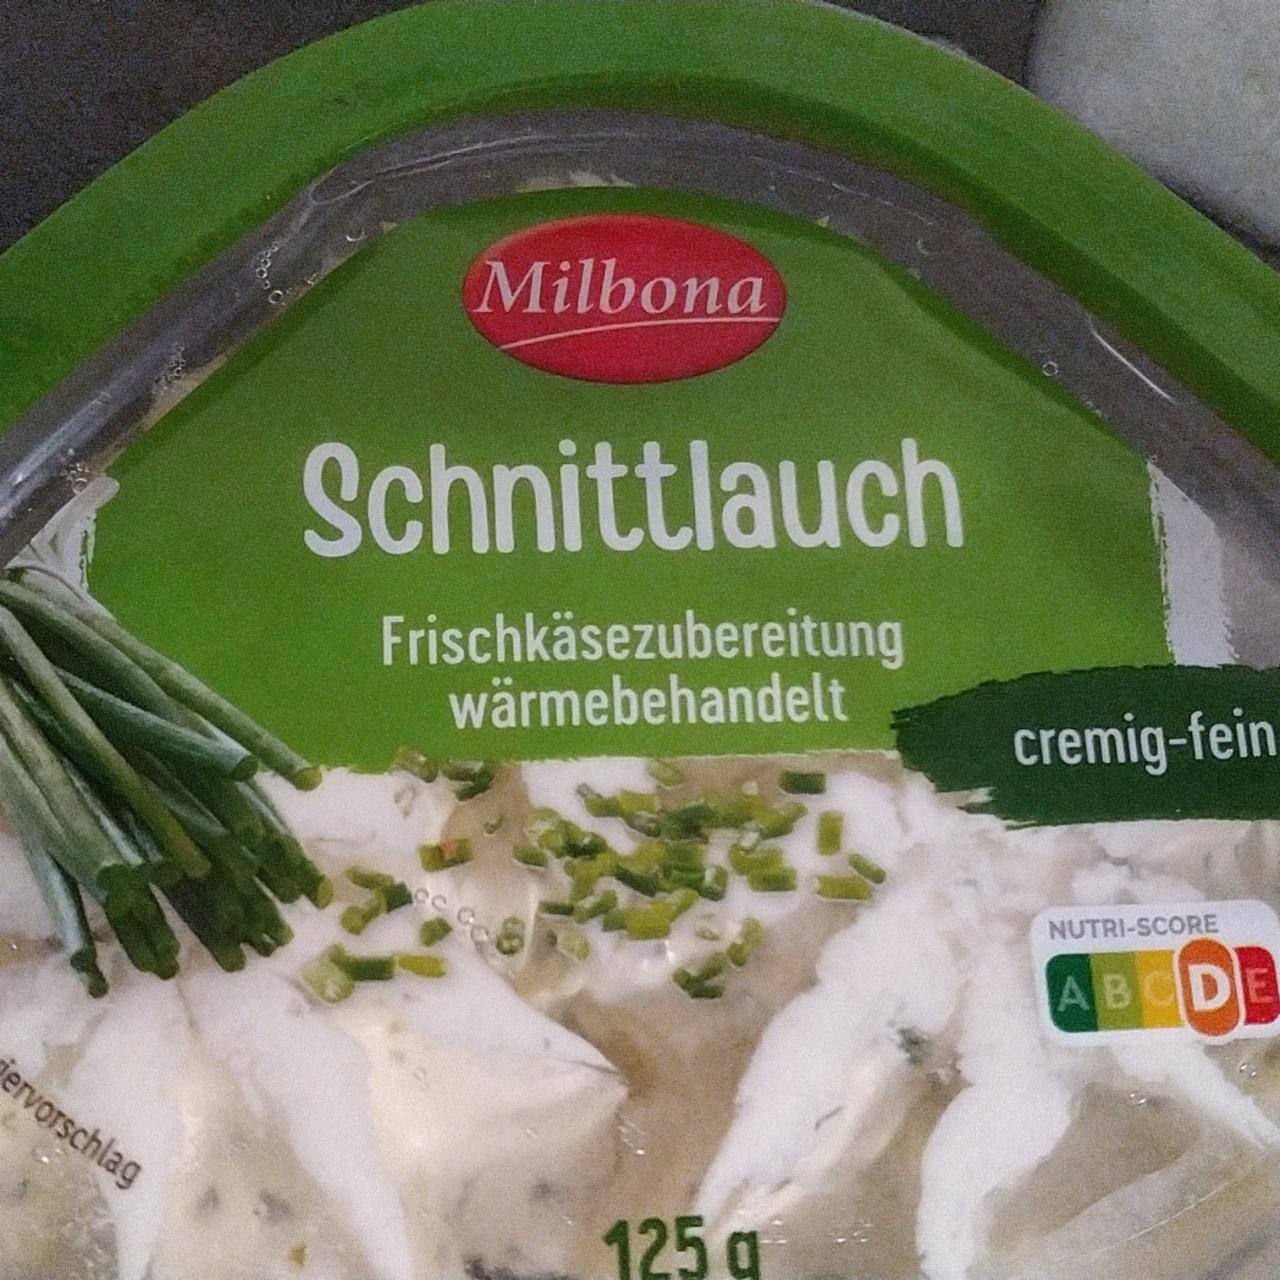 Фото - плавленный сыр Schnittlauch Milbona